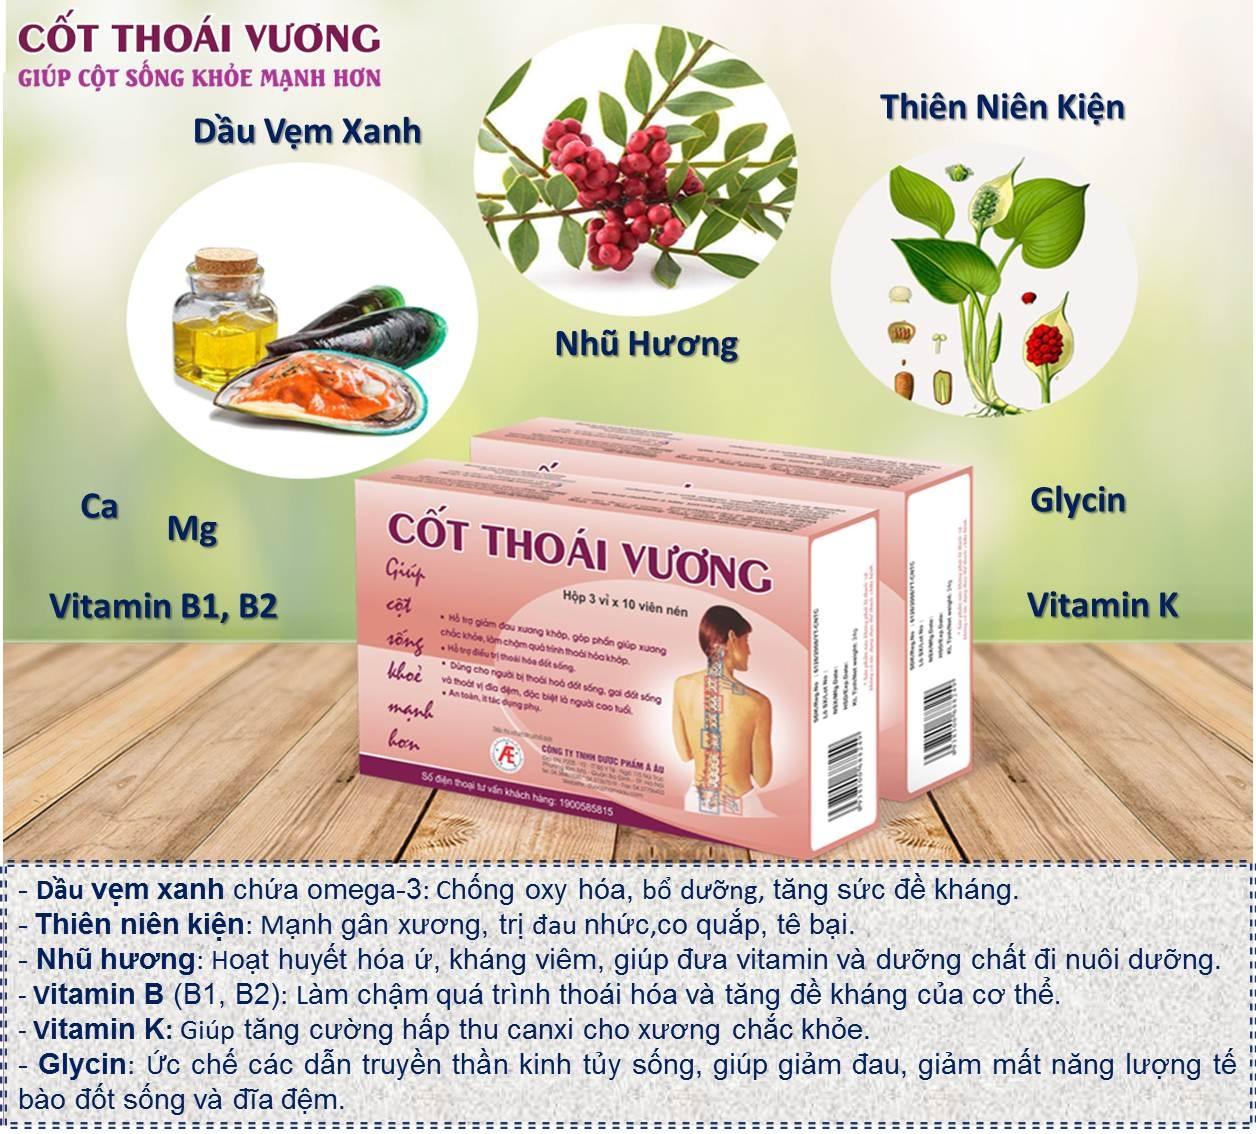 Thanh-phan-cot-thoai-vuong